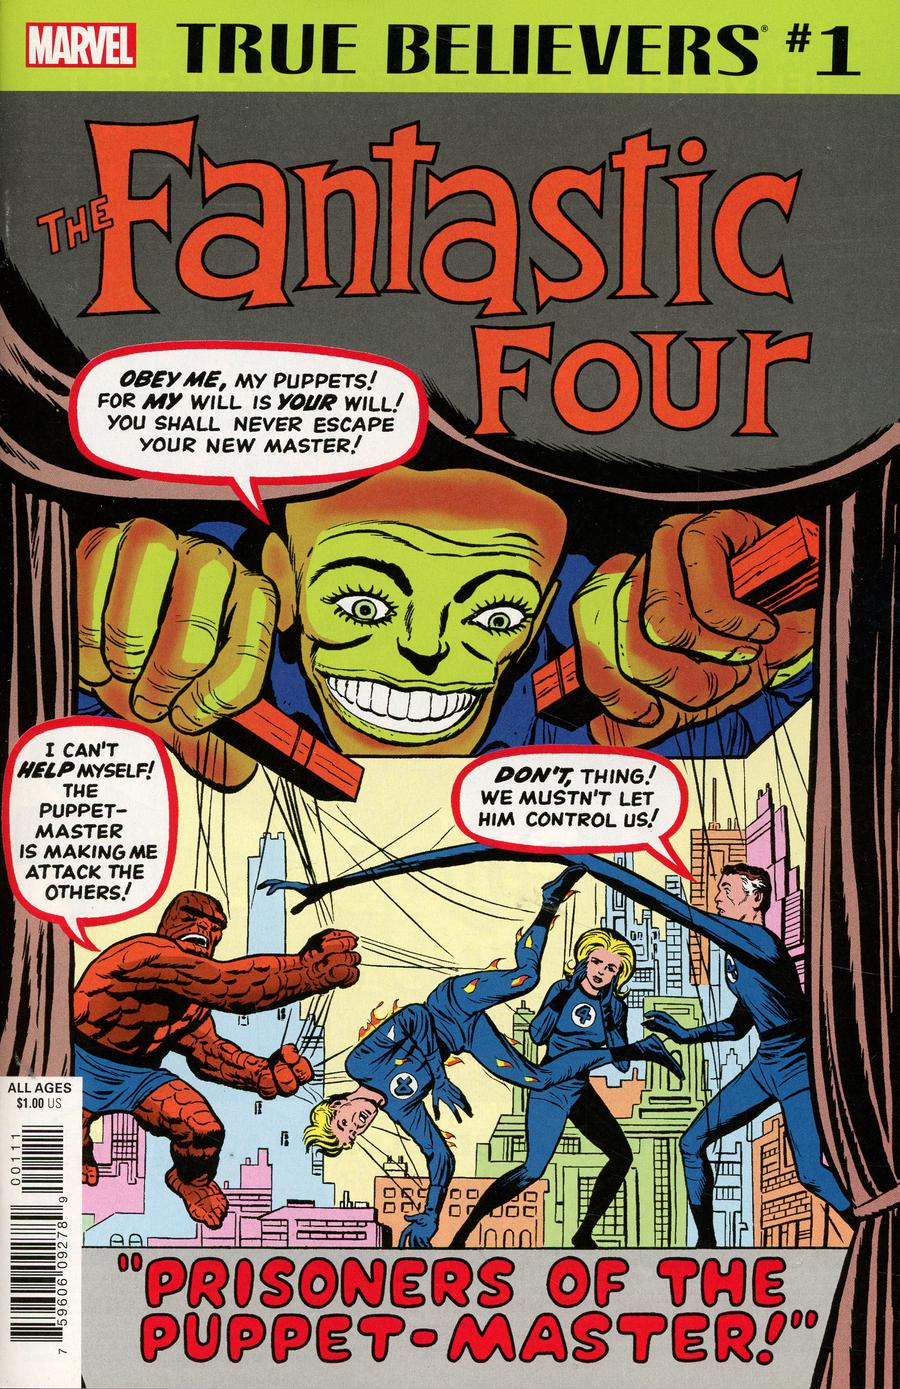 True Believers Fantastic Four Puppet Master #1